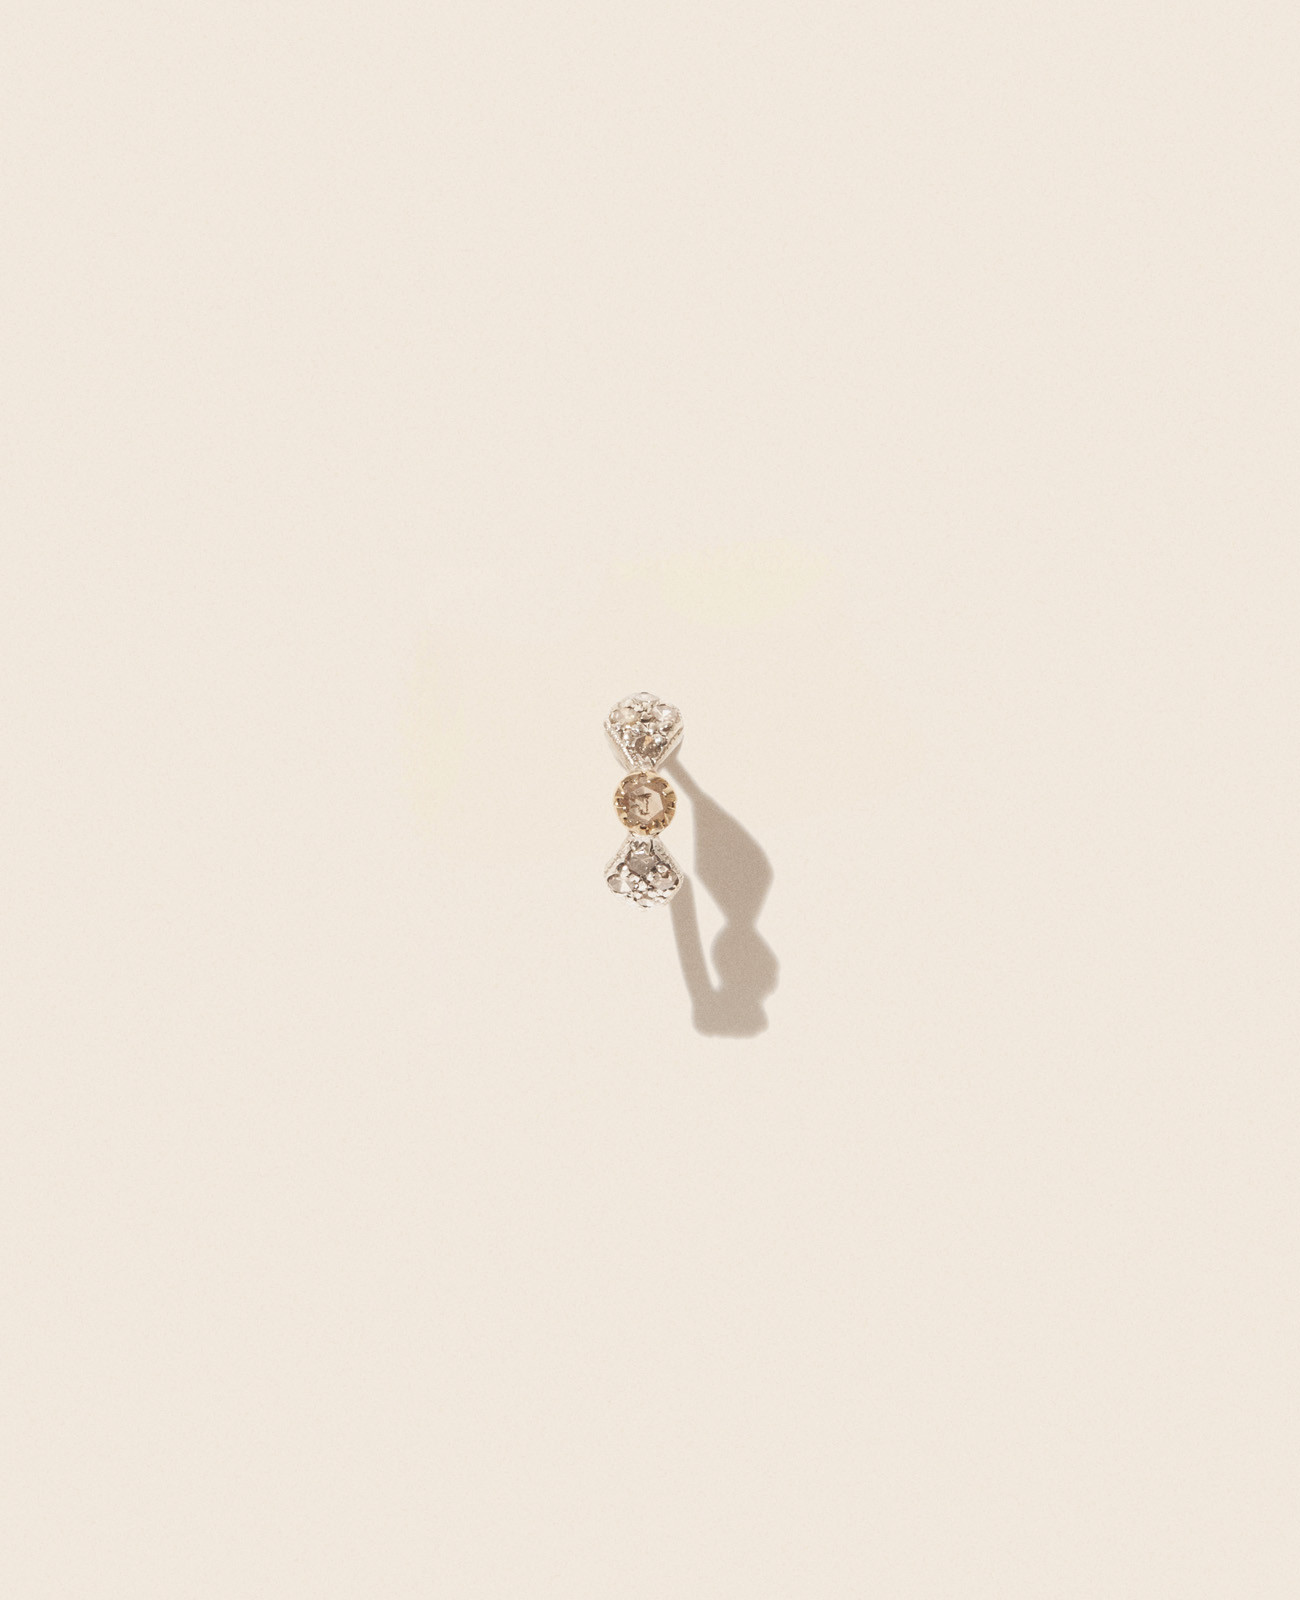 ADELE N°1 DIAMOND earring pascale monvoisin jewelry paris